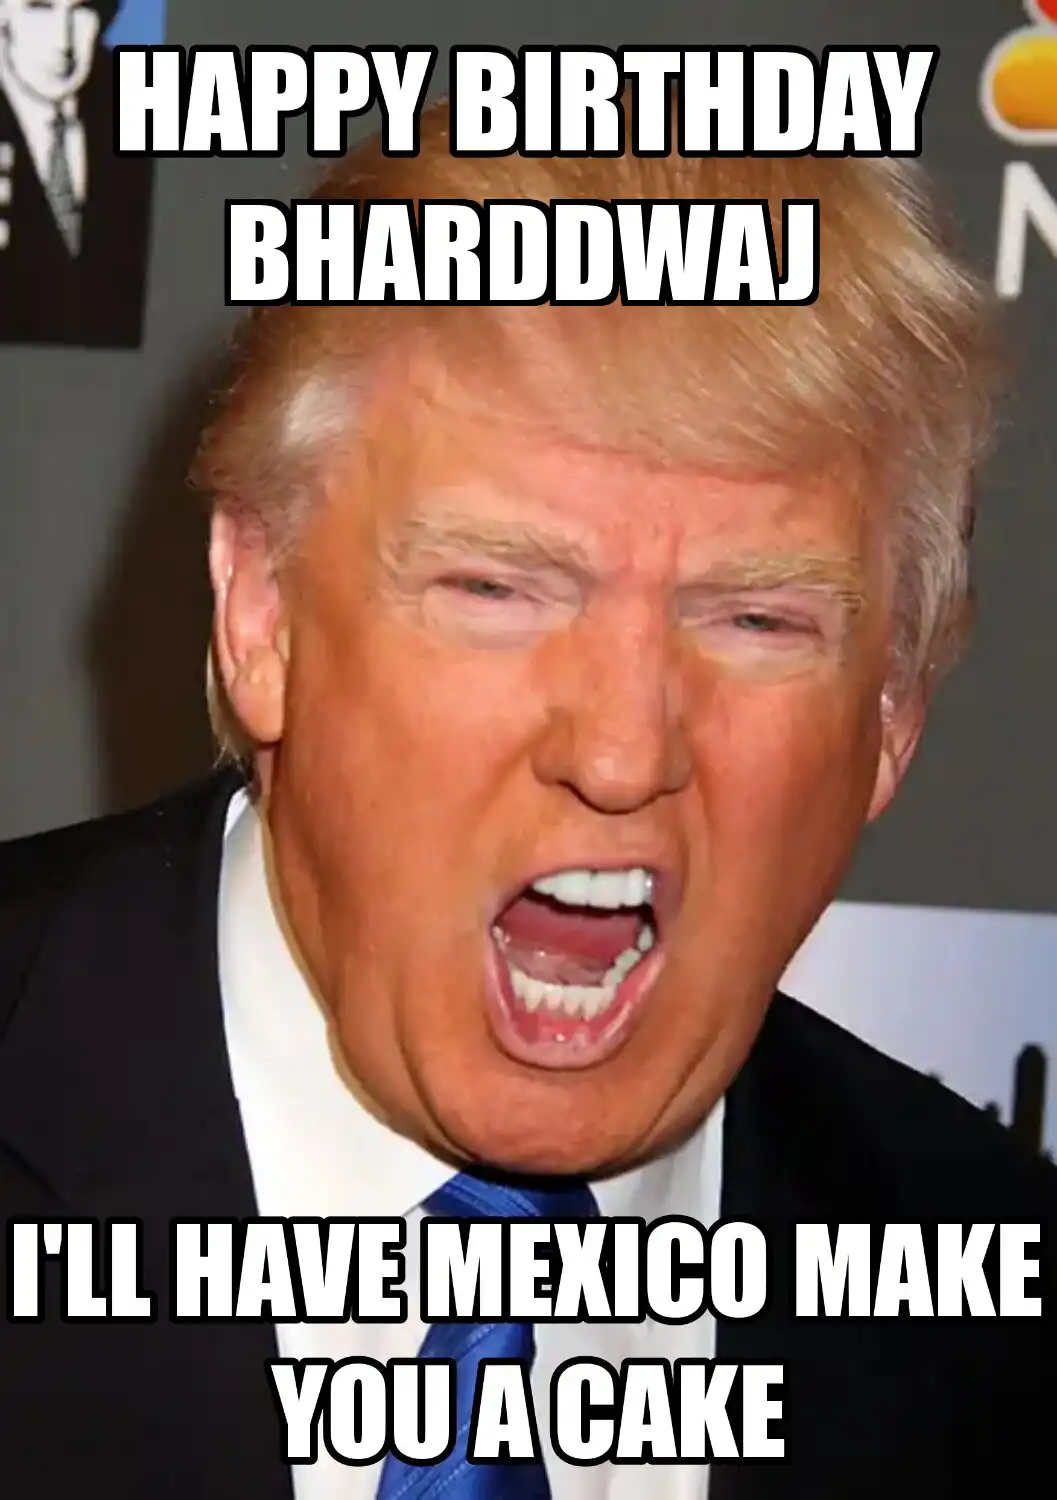 Happy Birthday Bharddwaj Mexico Make You A Cake Meme